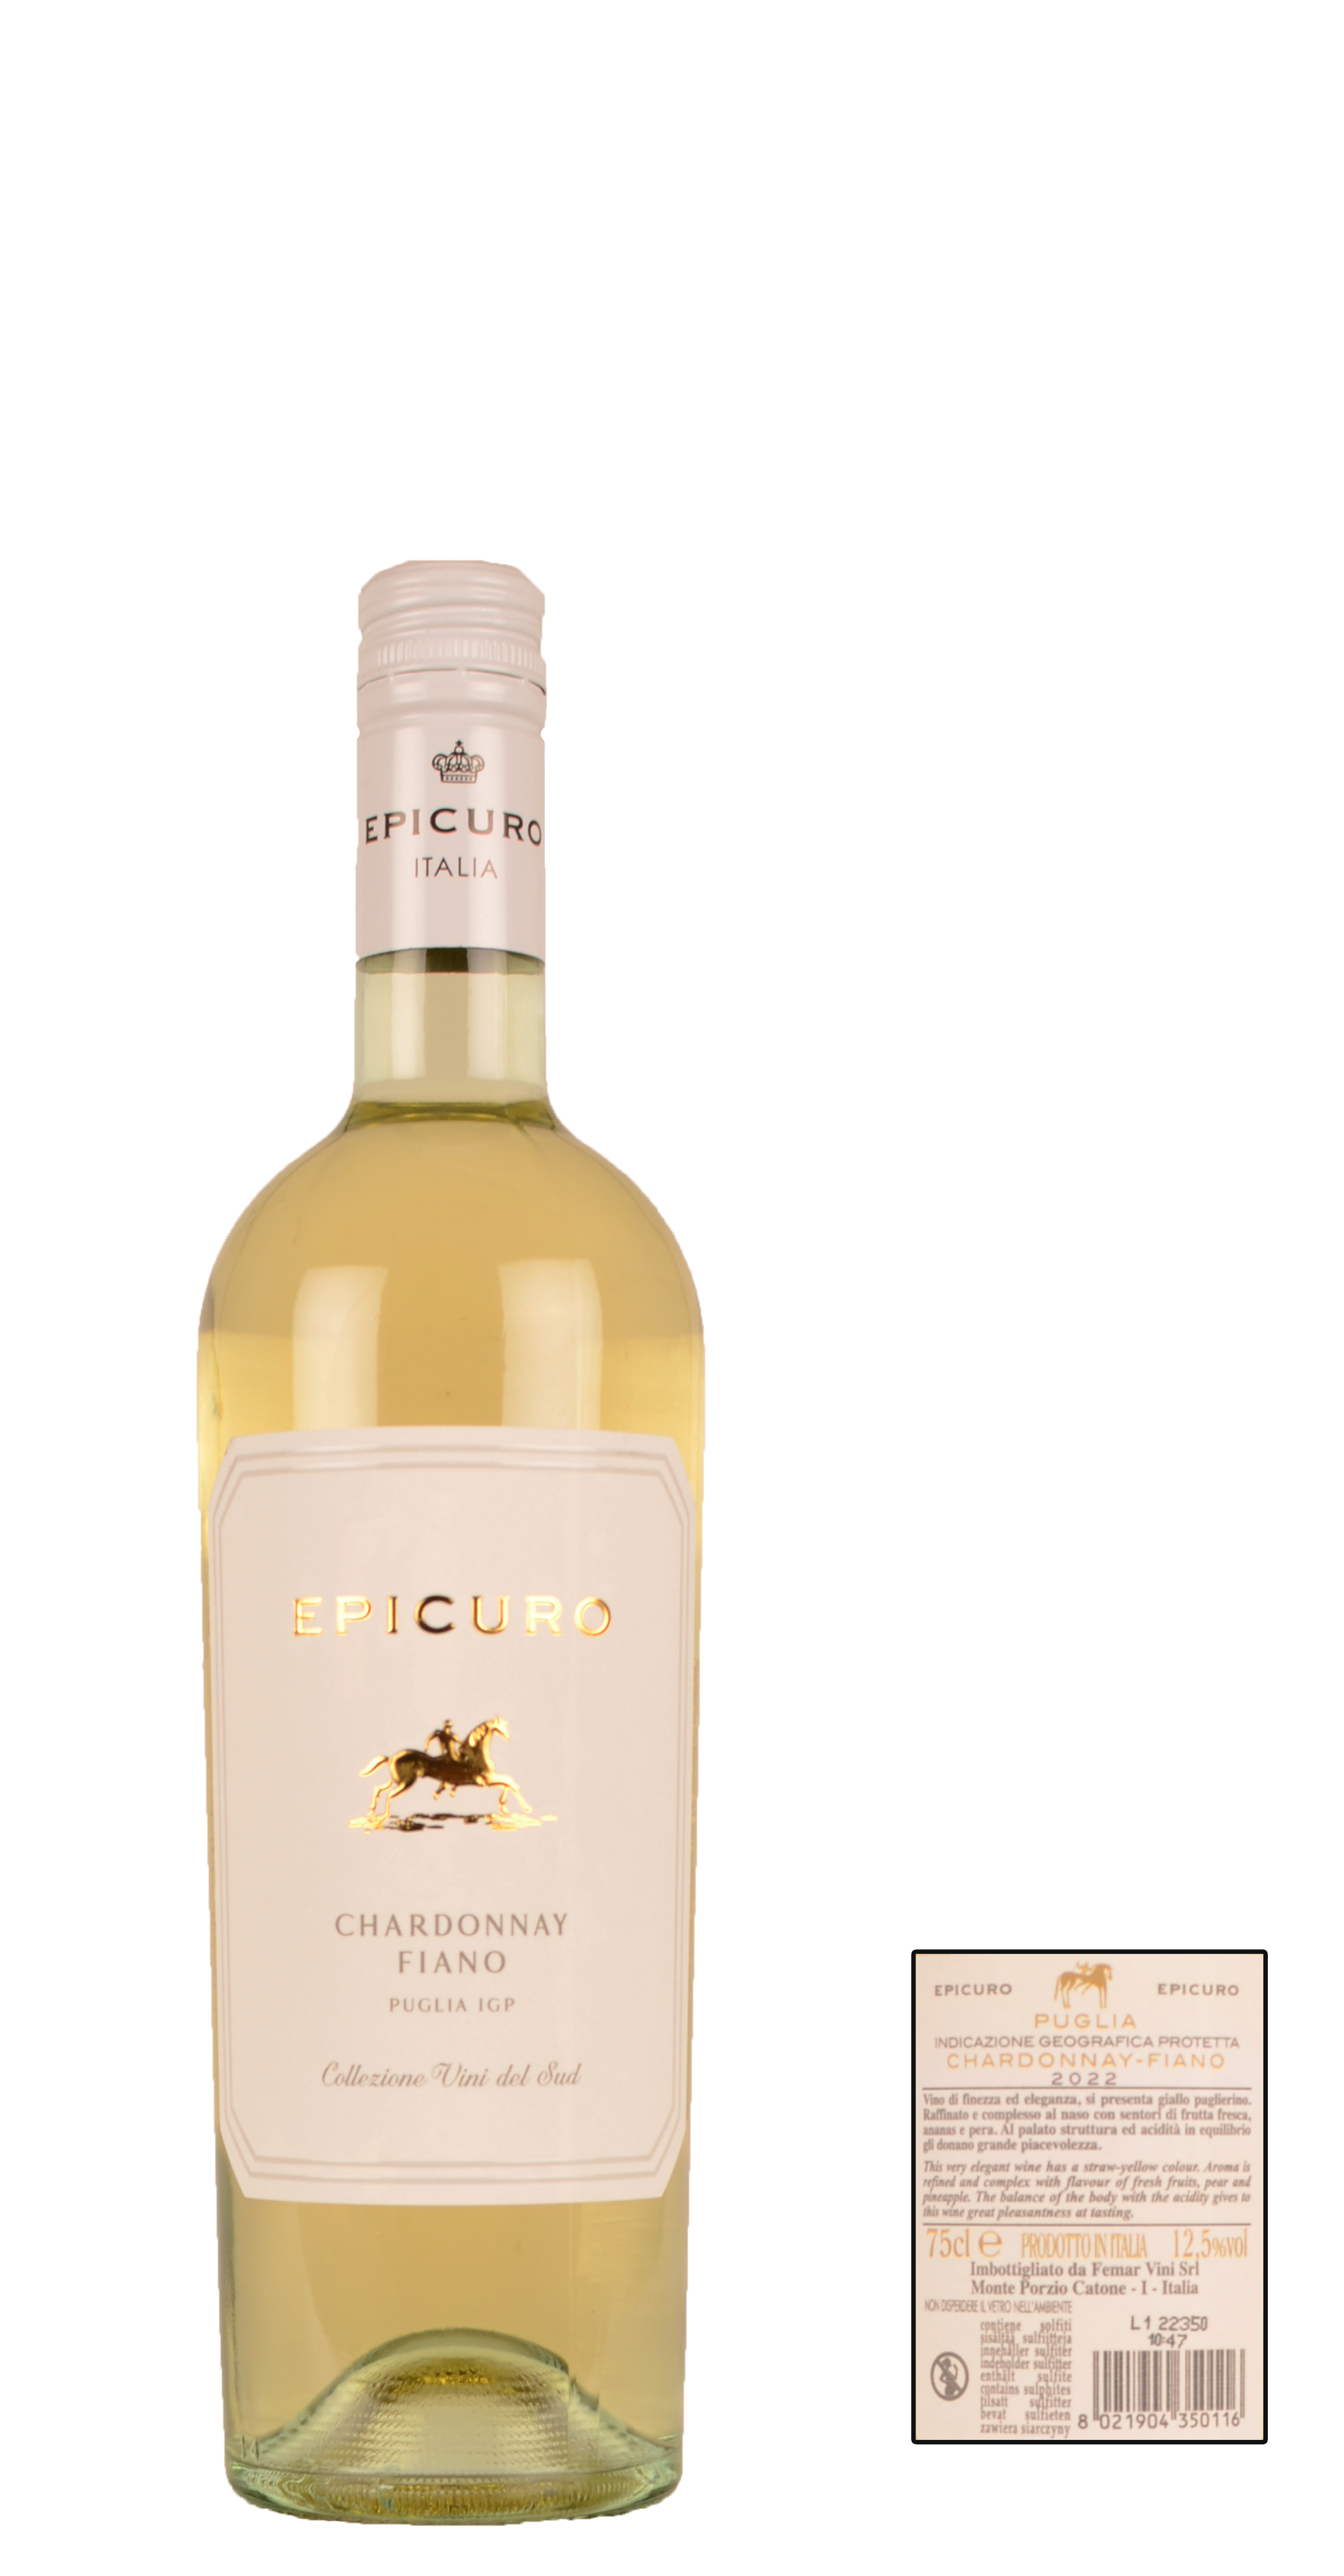 2022 - Screwcap Bianco Fiano Website Allied | Vintners Chardonnay - - 0.75 Ltr. - Epicuro Puglia - - International